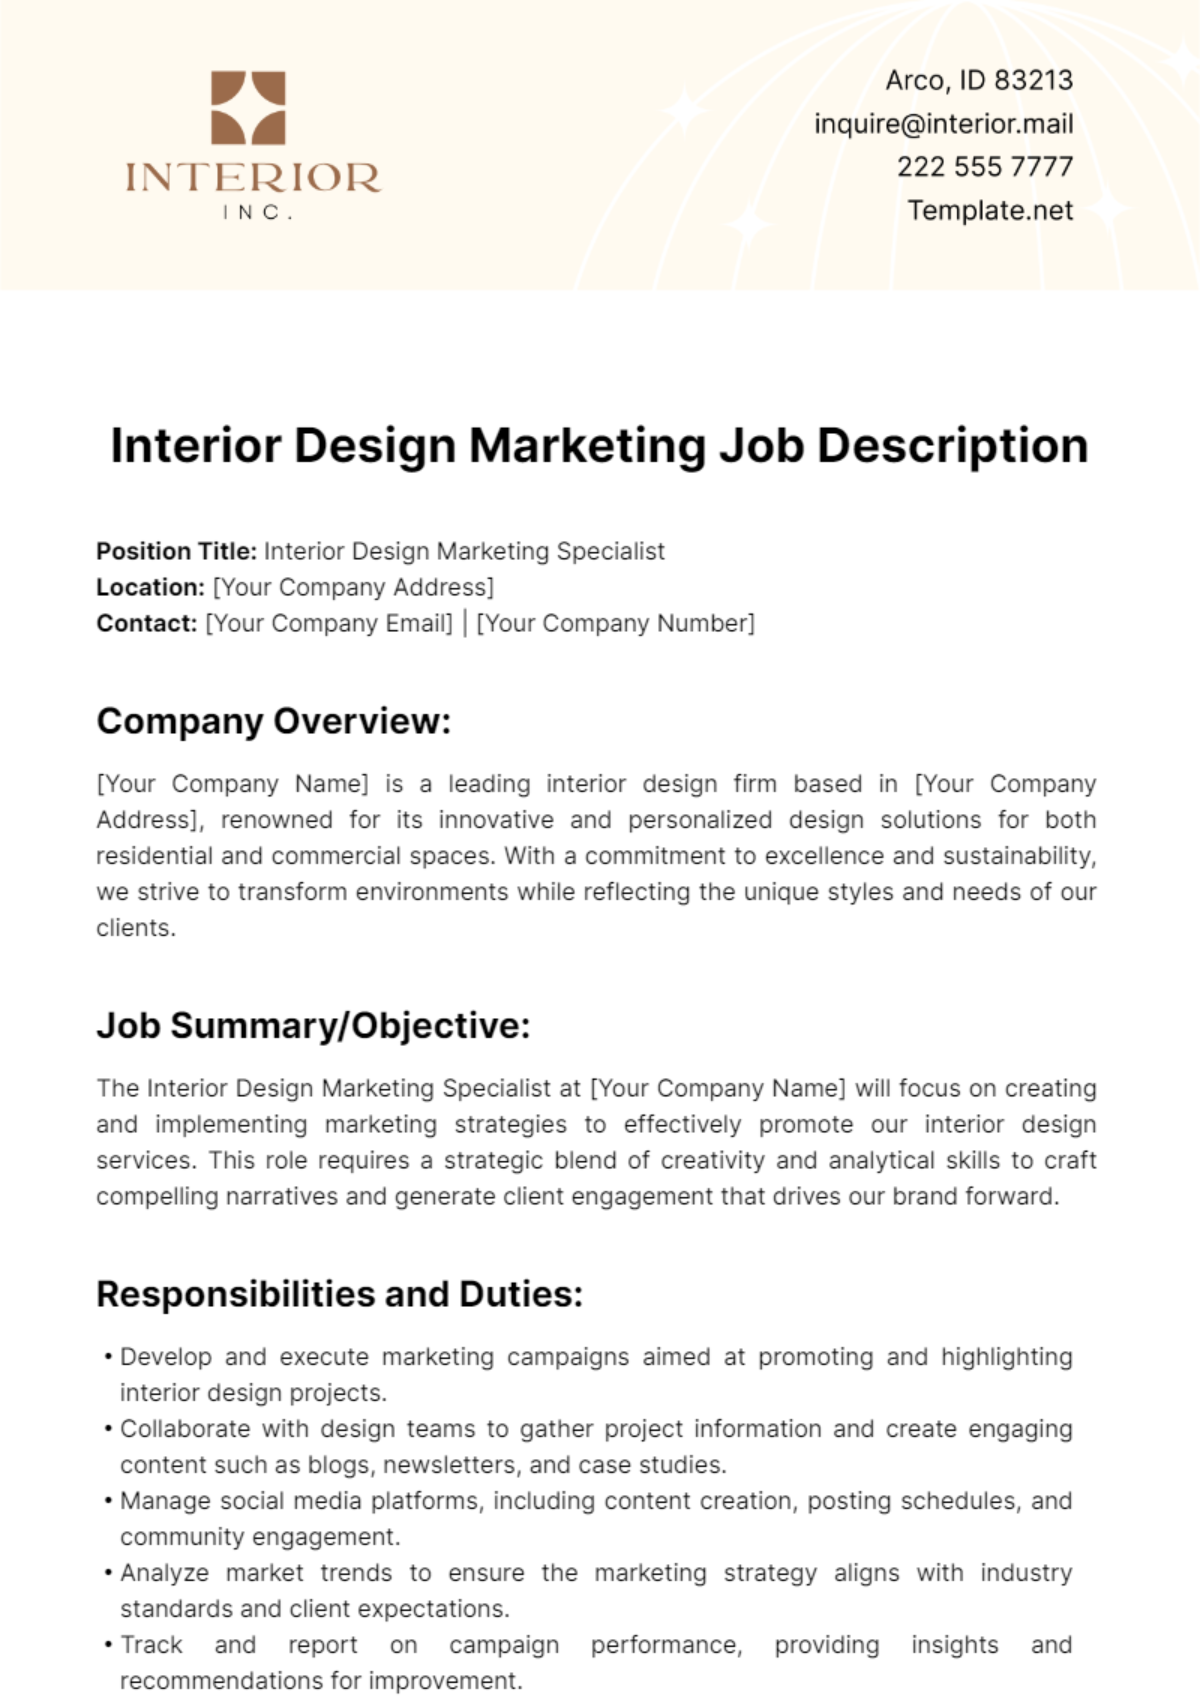 Interior Design Marketing Job Description Template